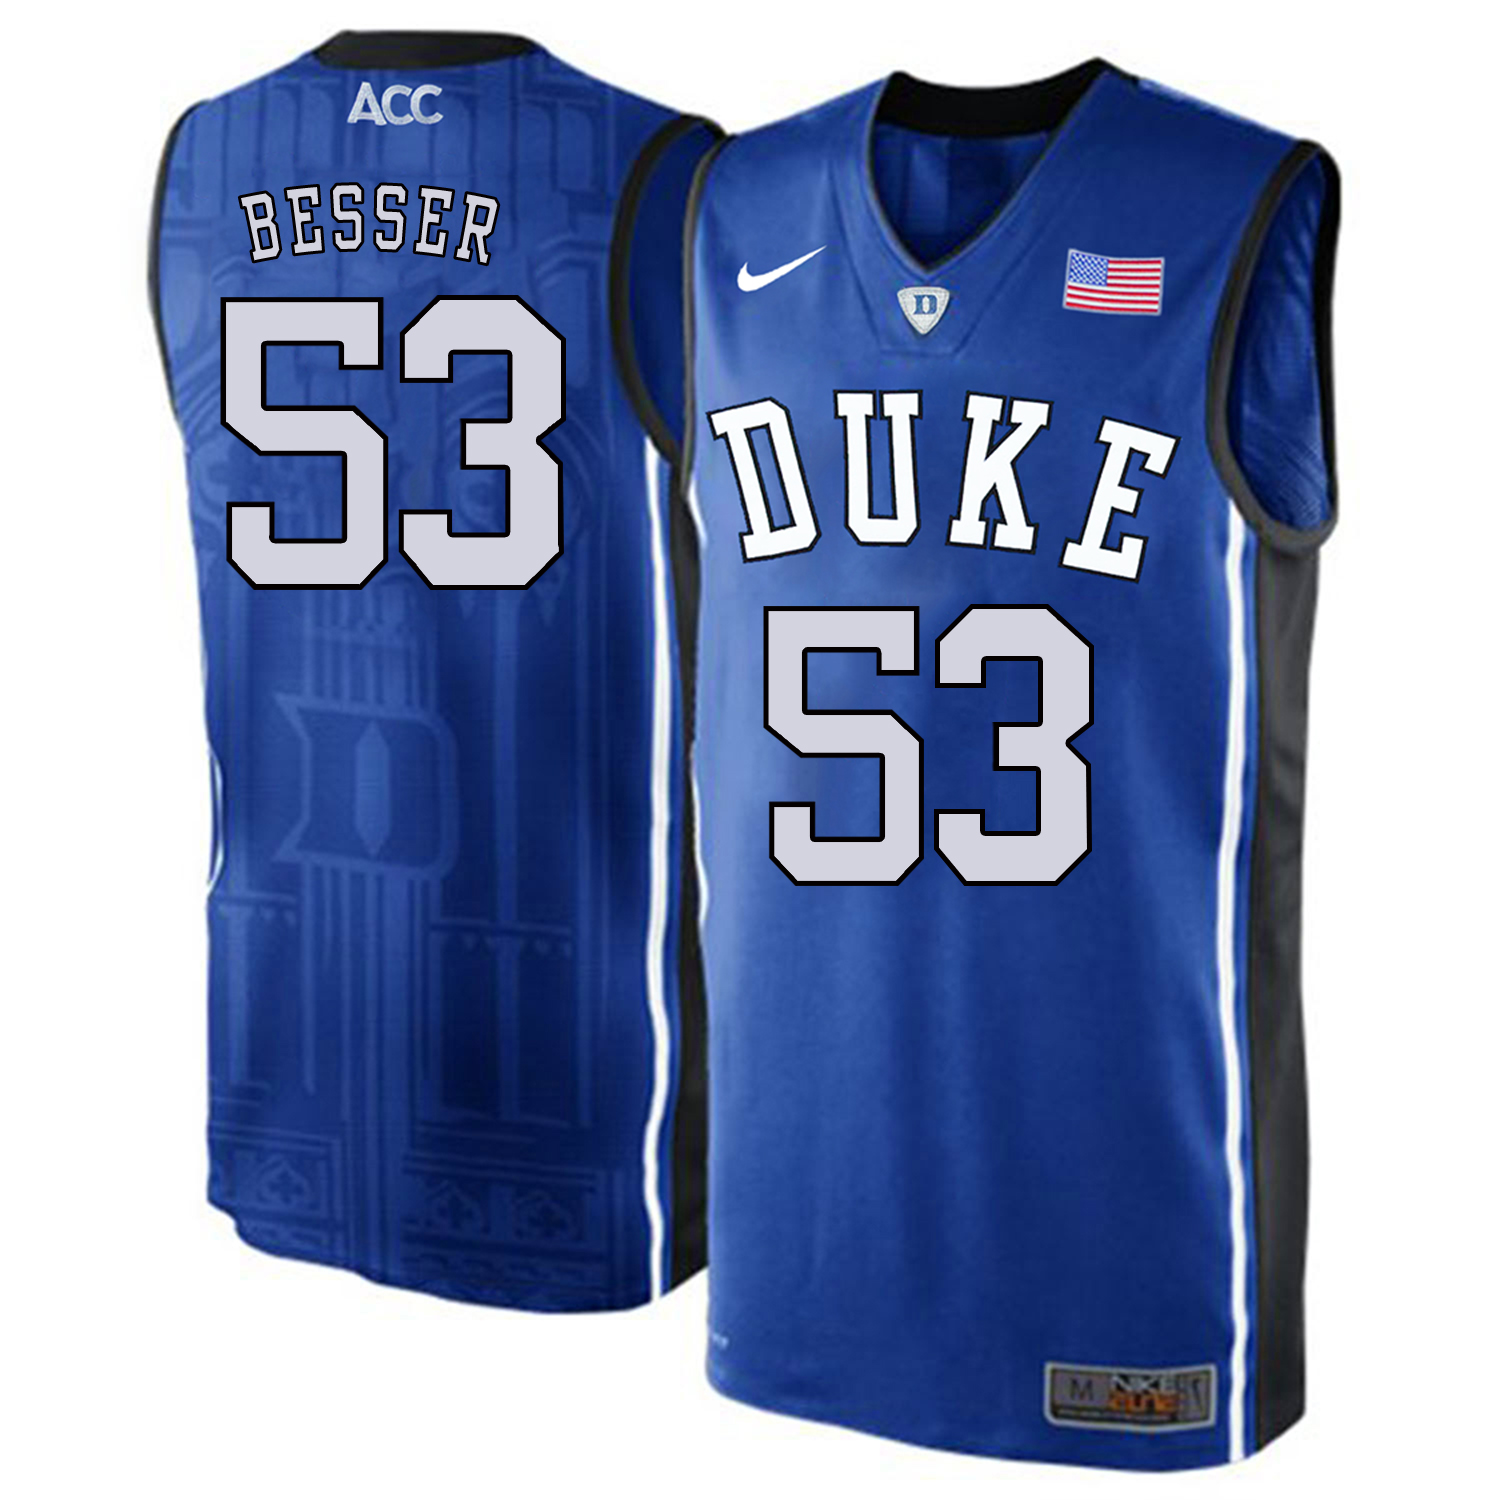 Duke Blue Devils 53 Brennan Besser Blue Elite Nike College Basketball Jersey